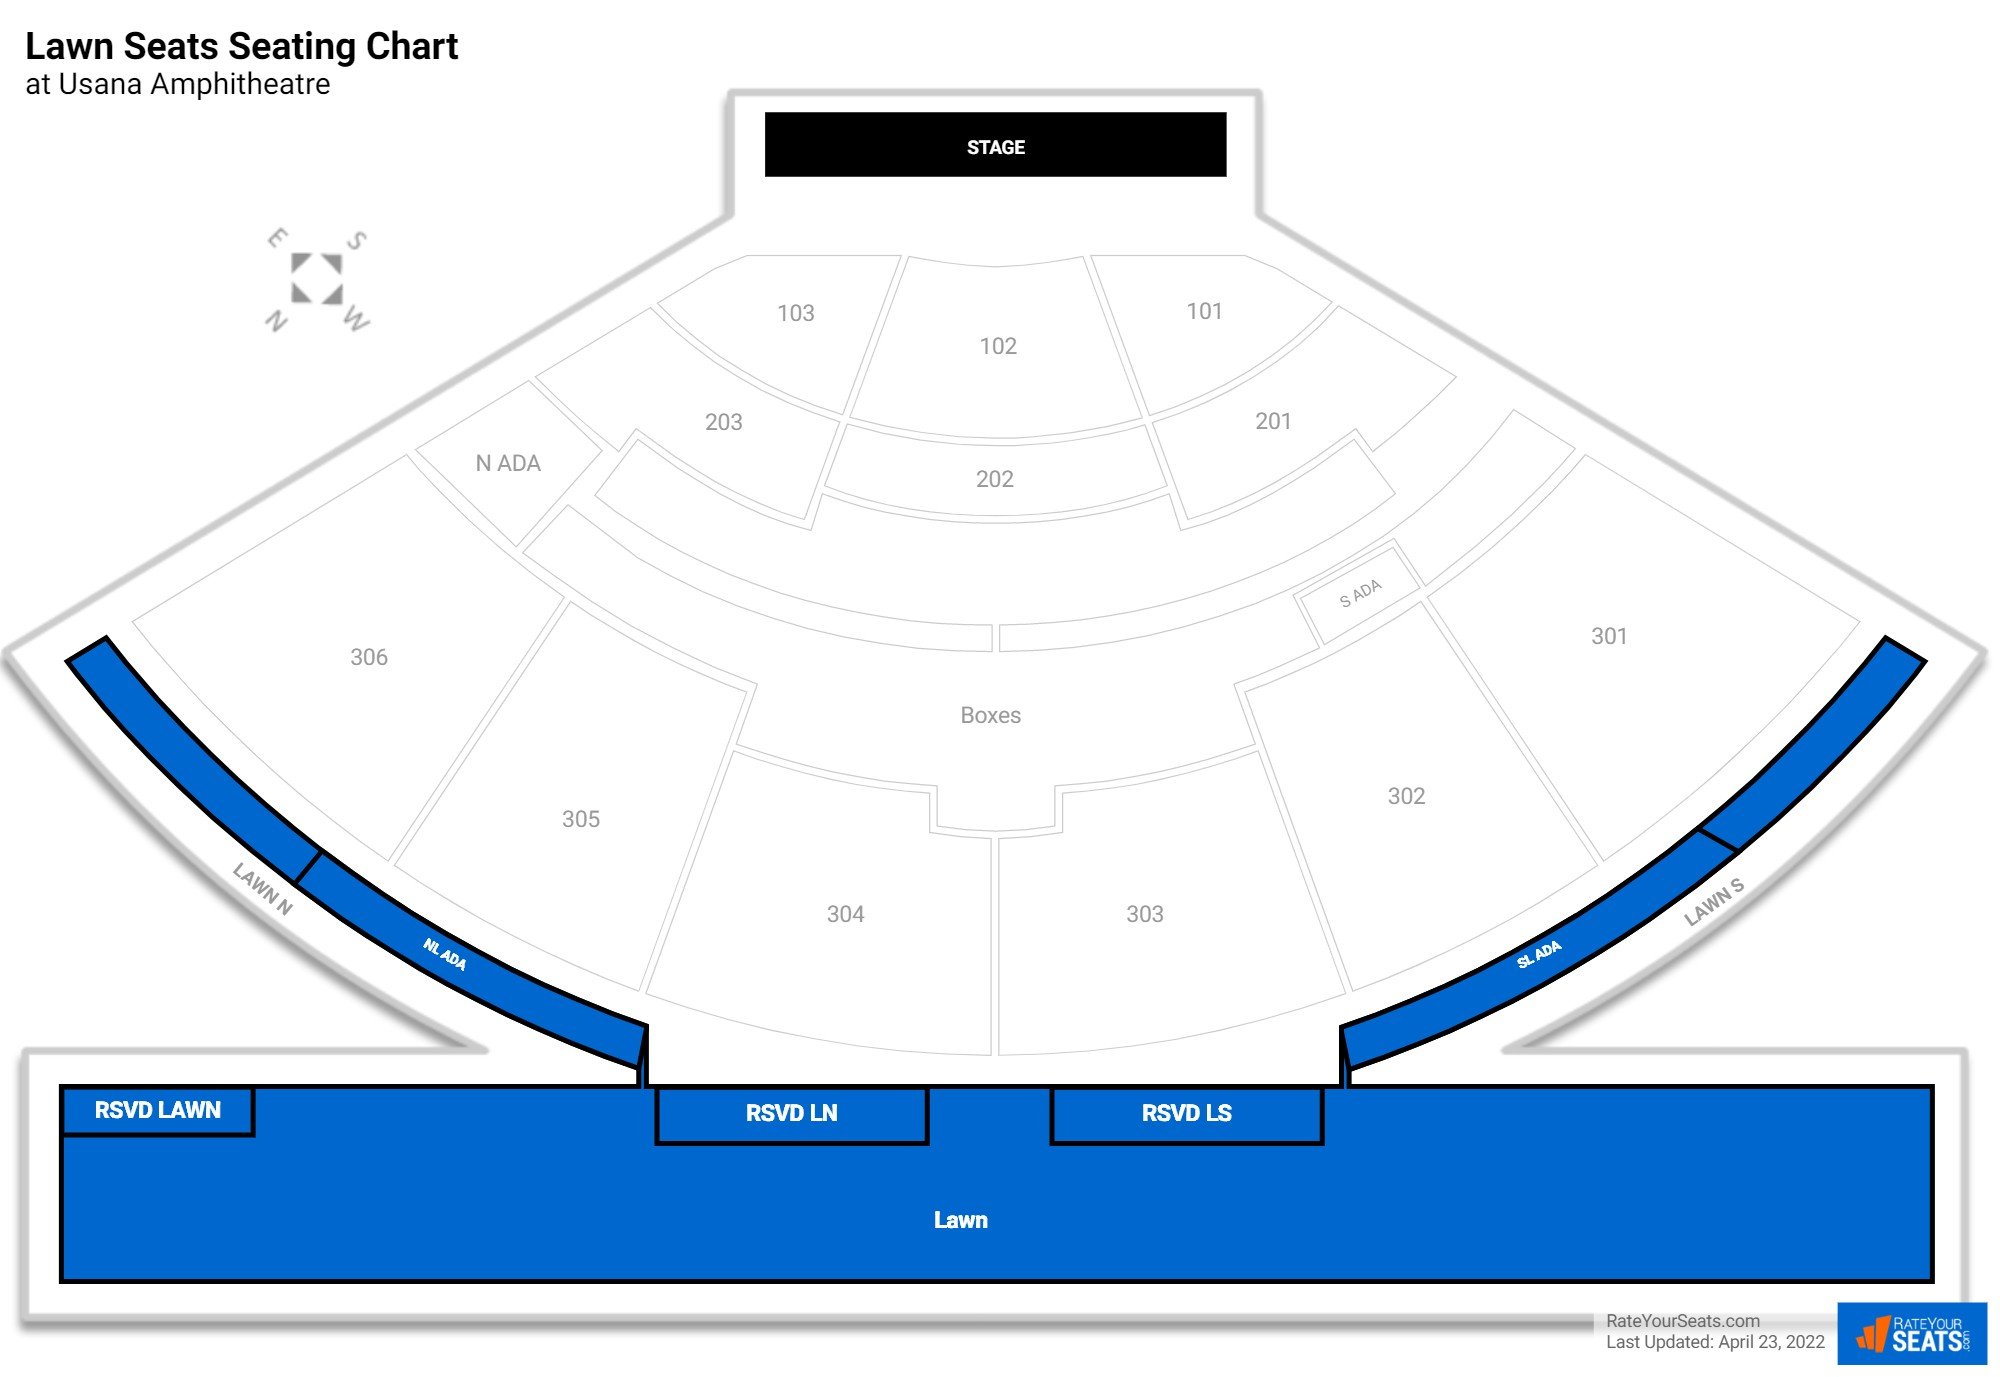 Concert Lawn Seats Seating Chart at Usana Amphitheatre